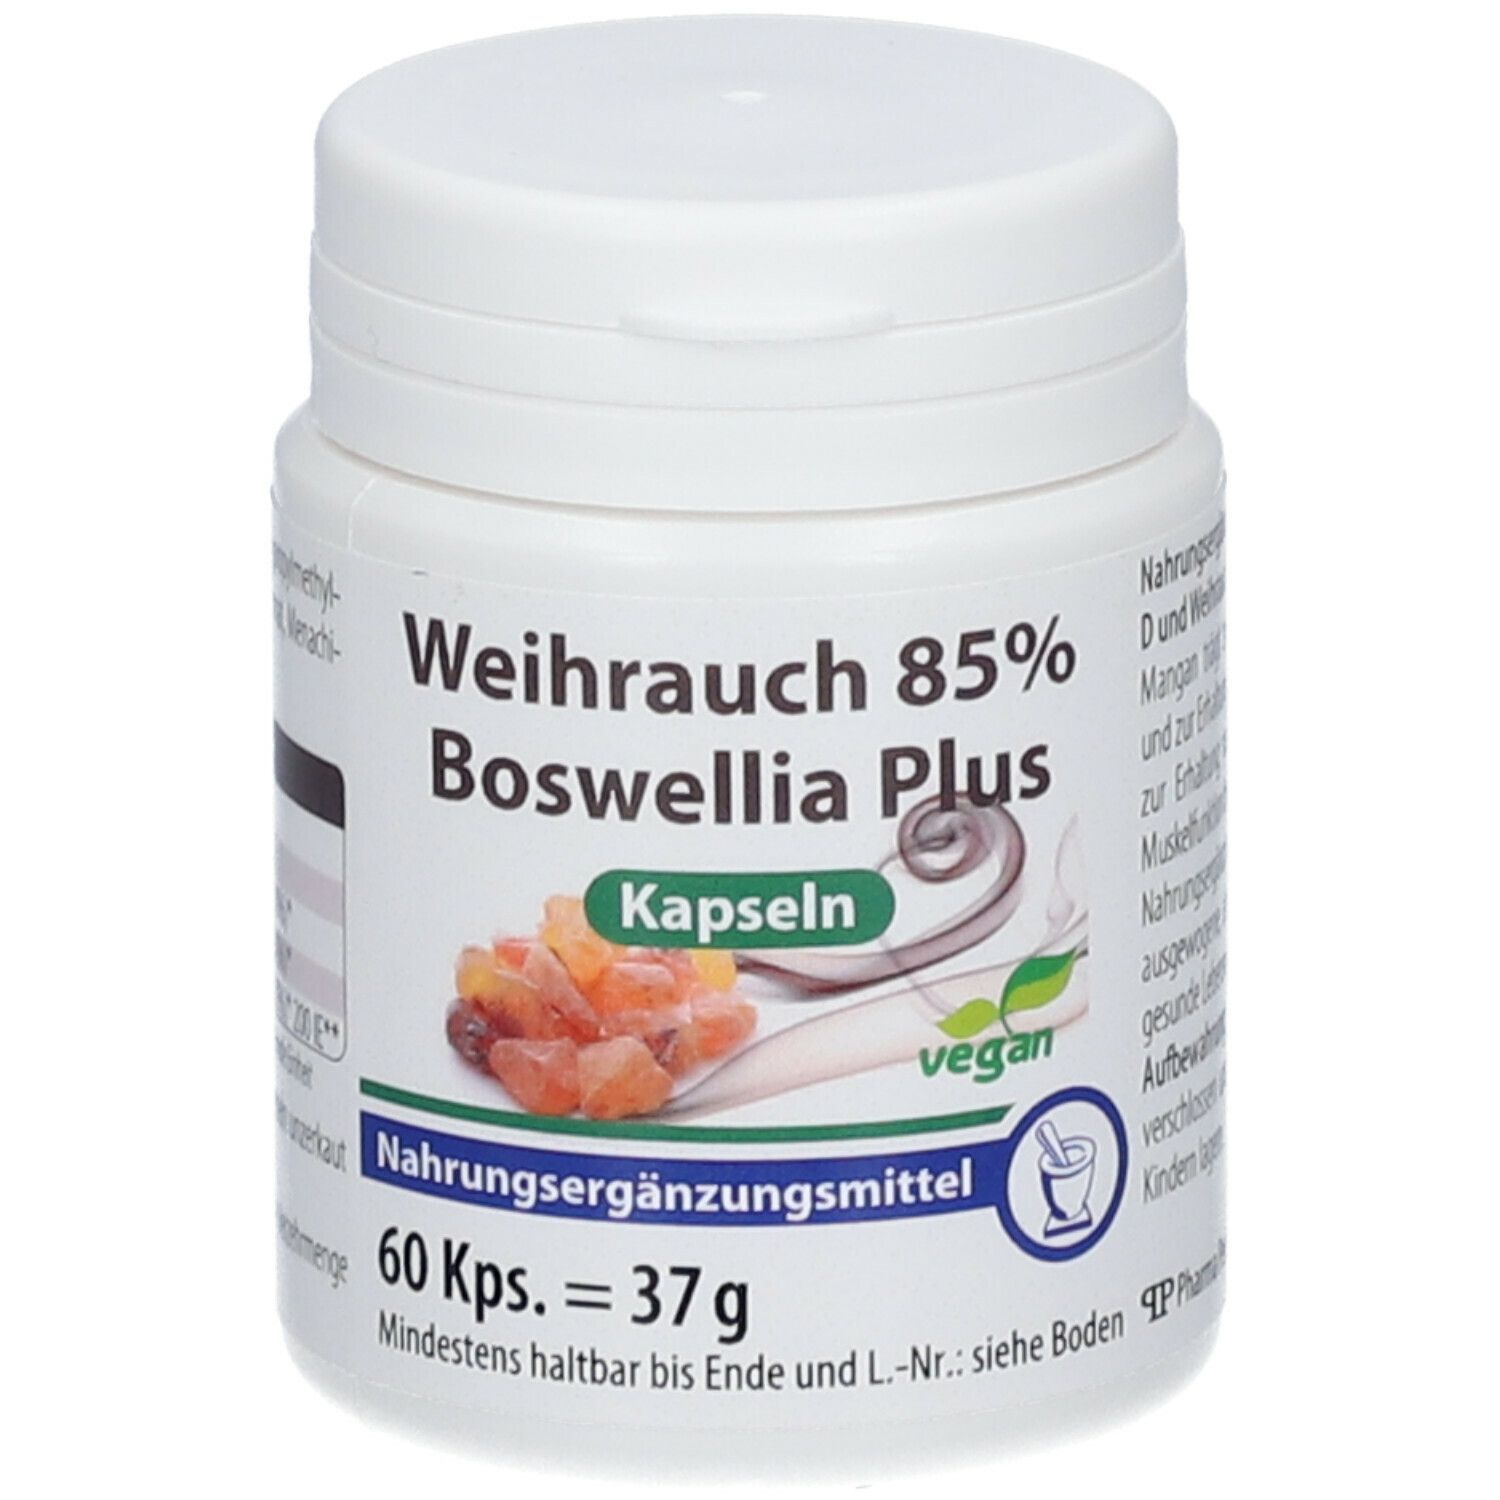 Weihrauch 85% Boswellia Plus vegan Kapseln